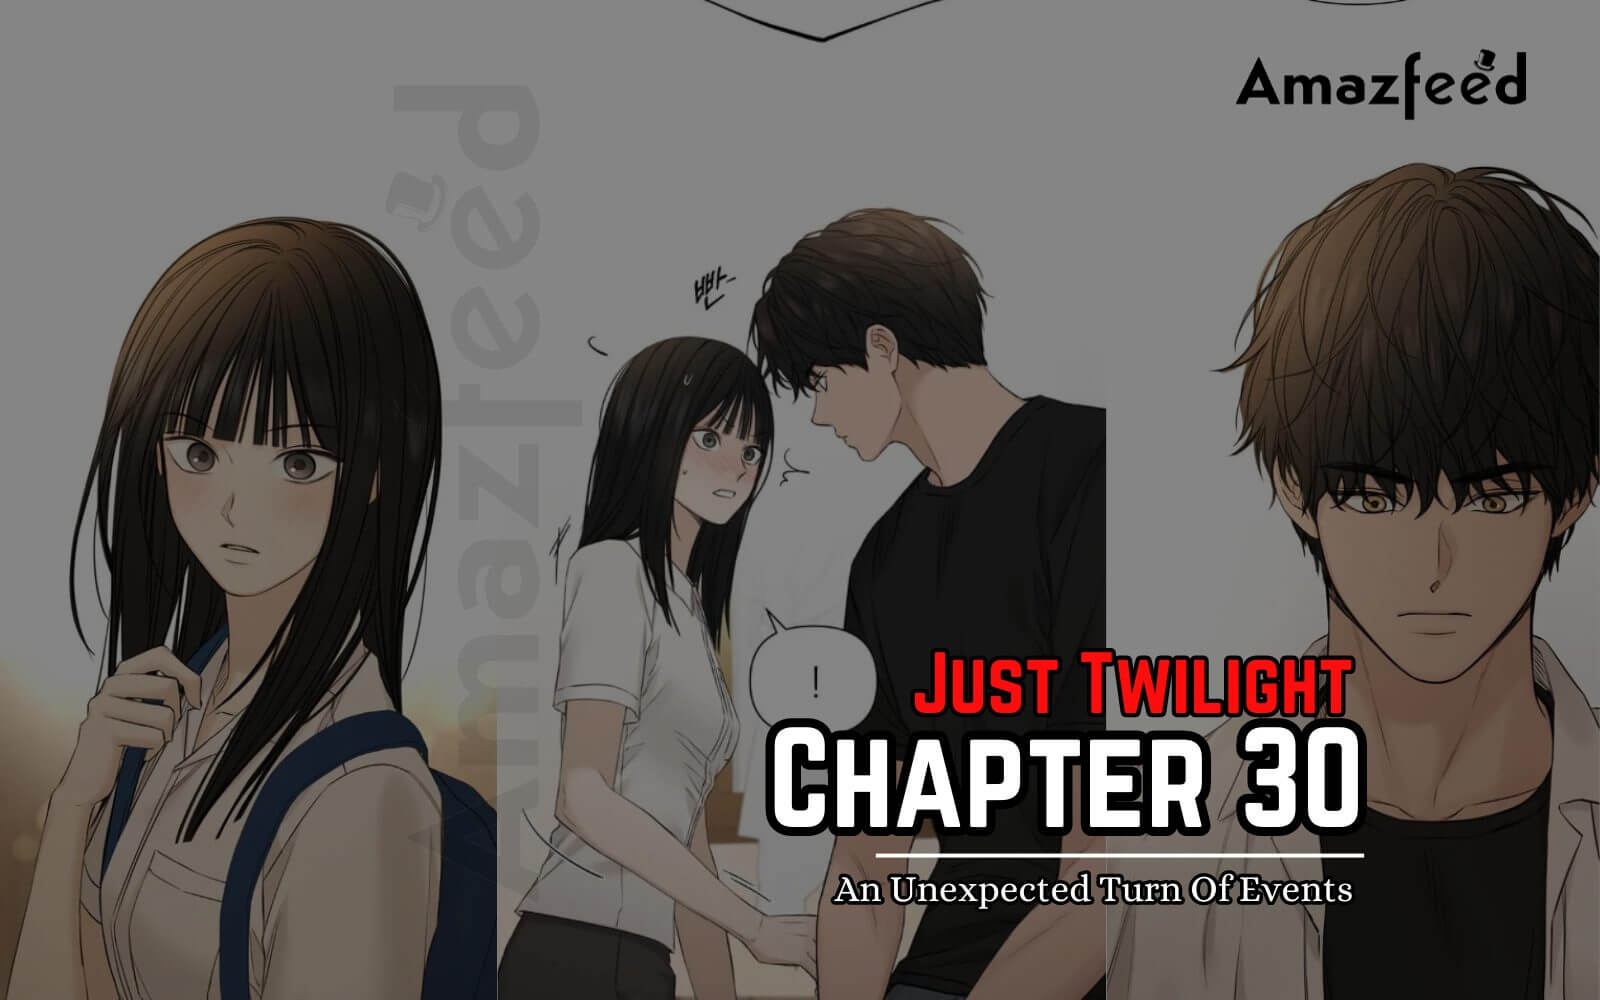 Just Twilight Chapter 30 Spoiler